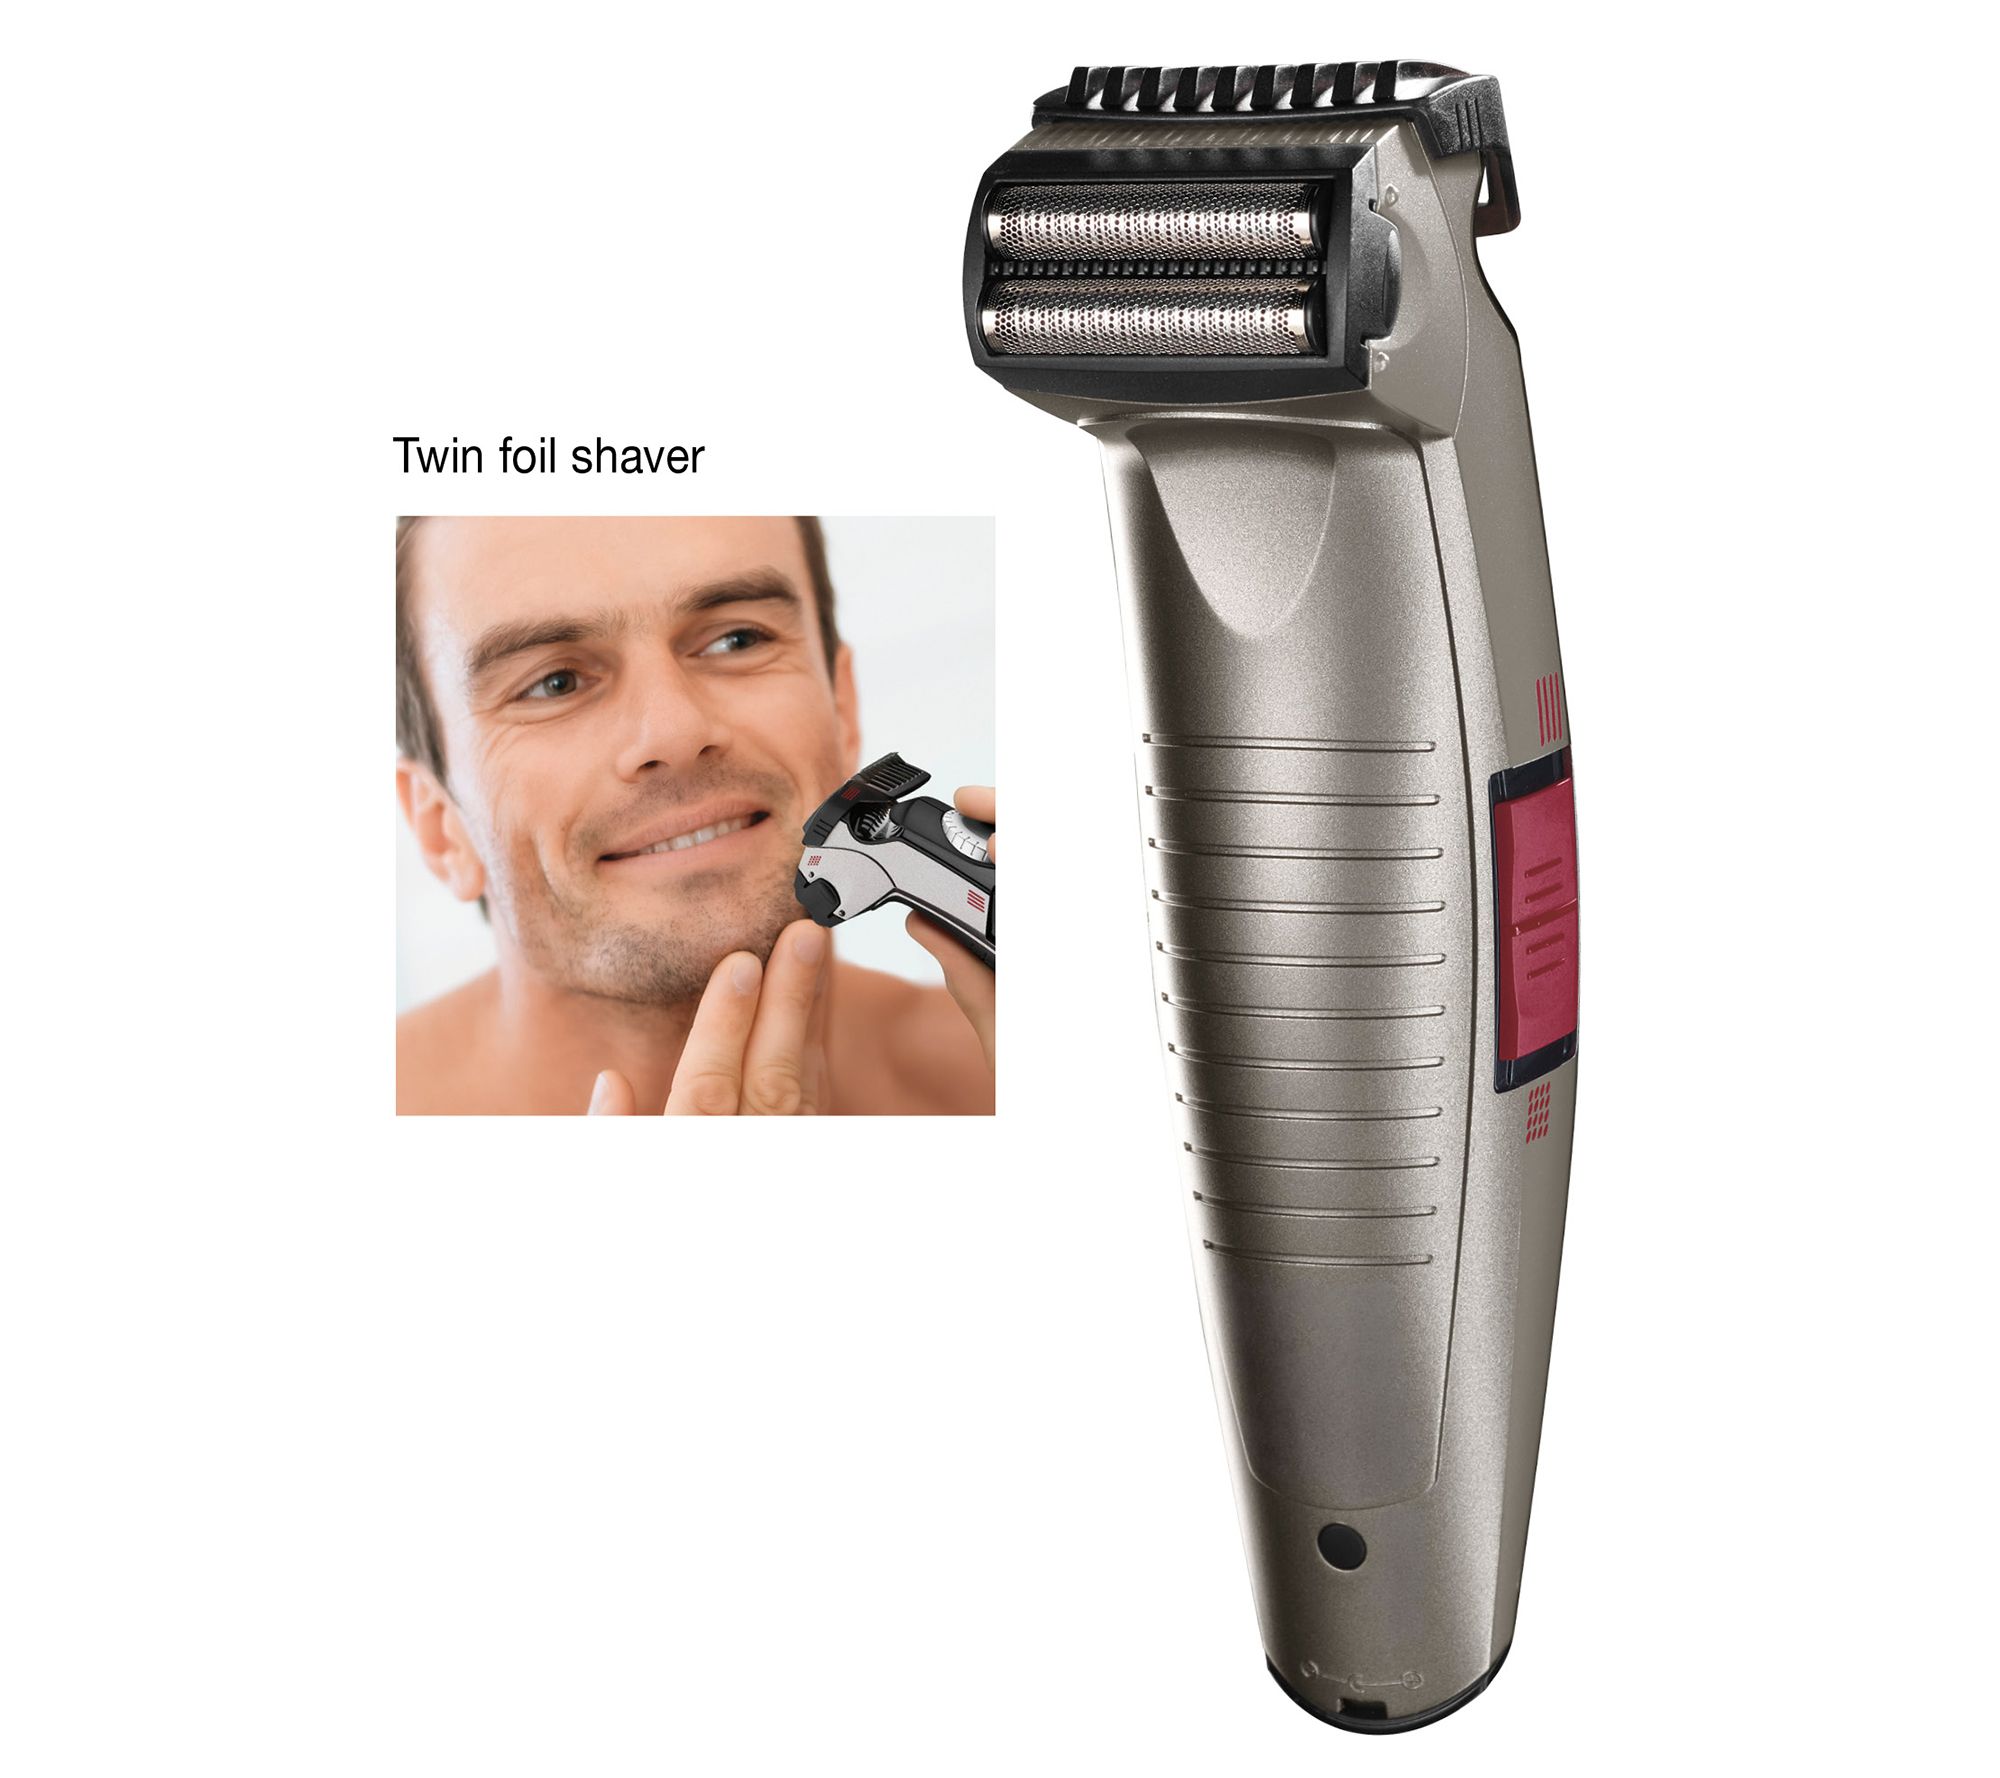 brookstone beard trimmer